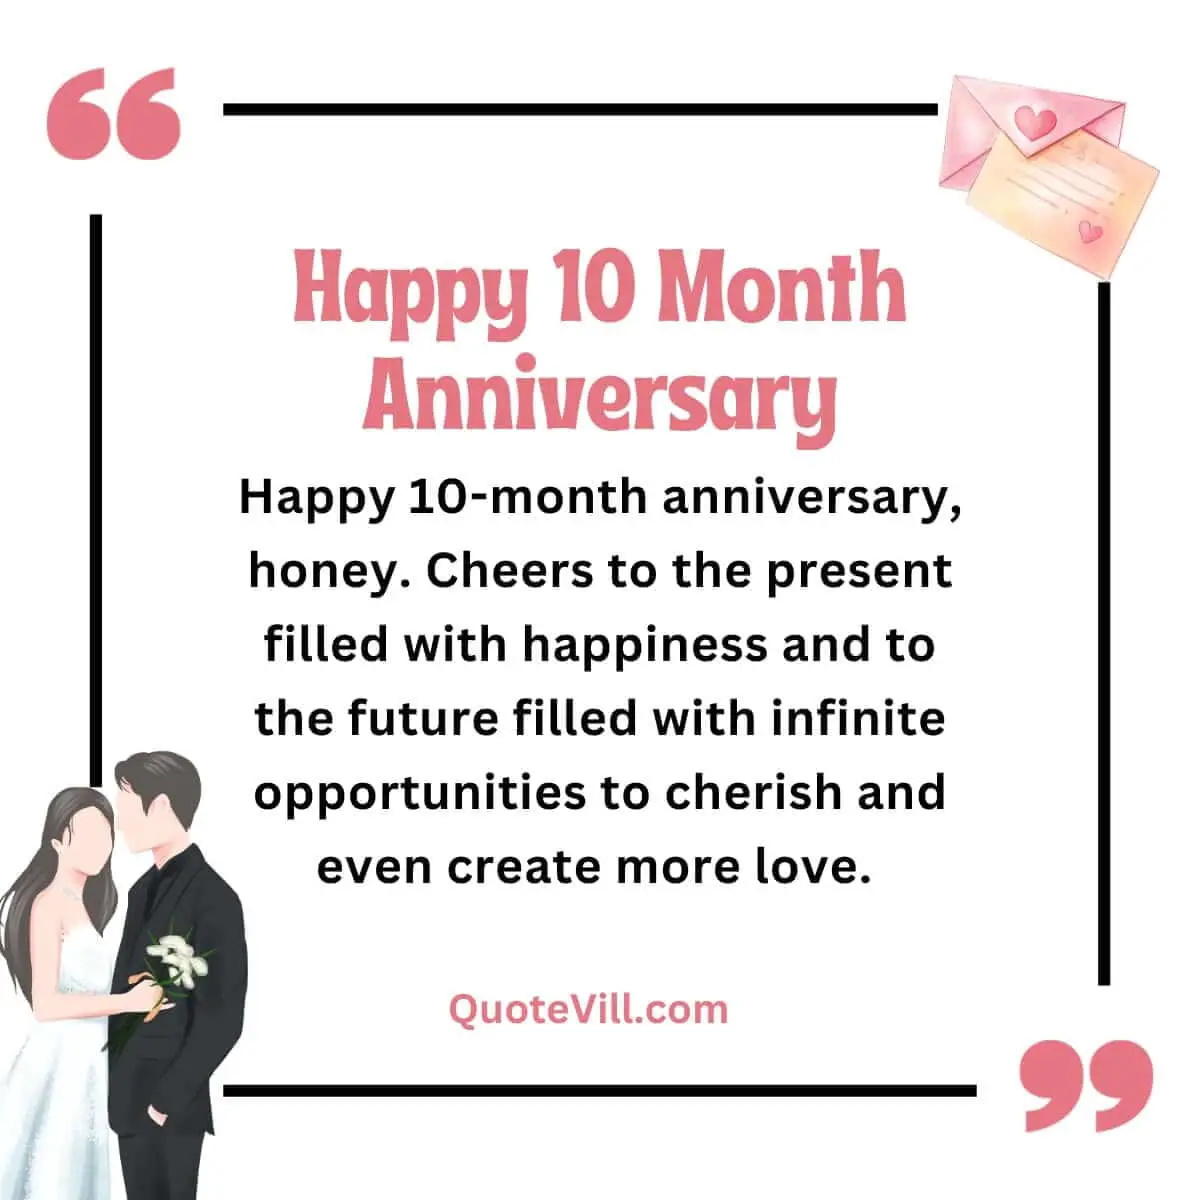 Happy 10 month Anniversary Wishes